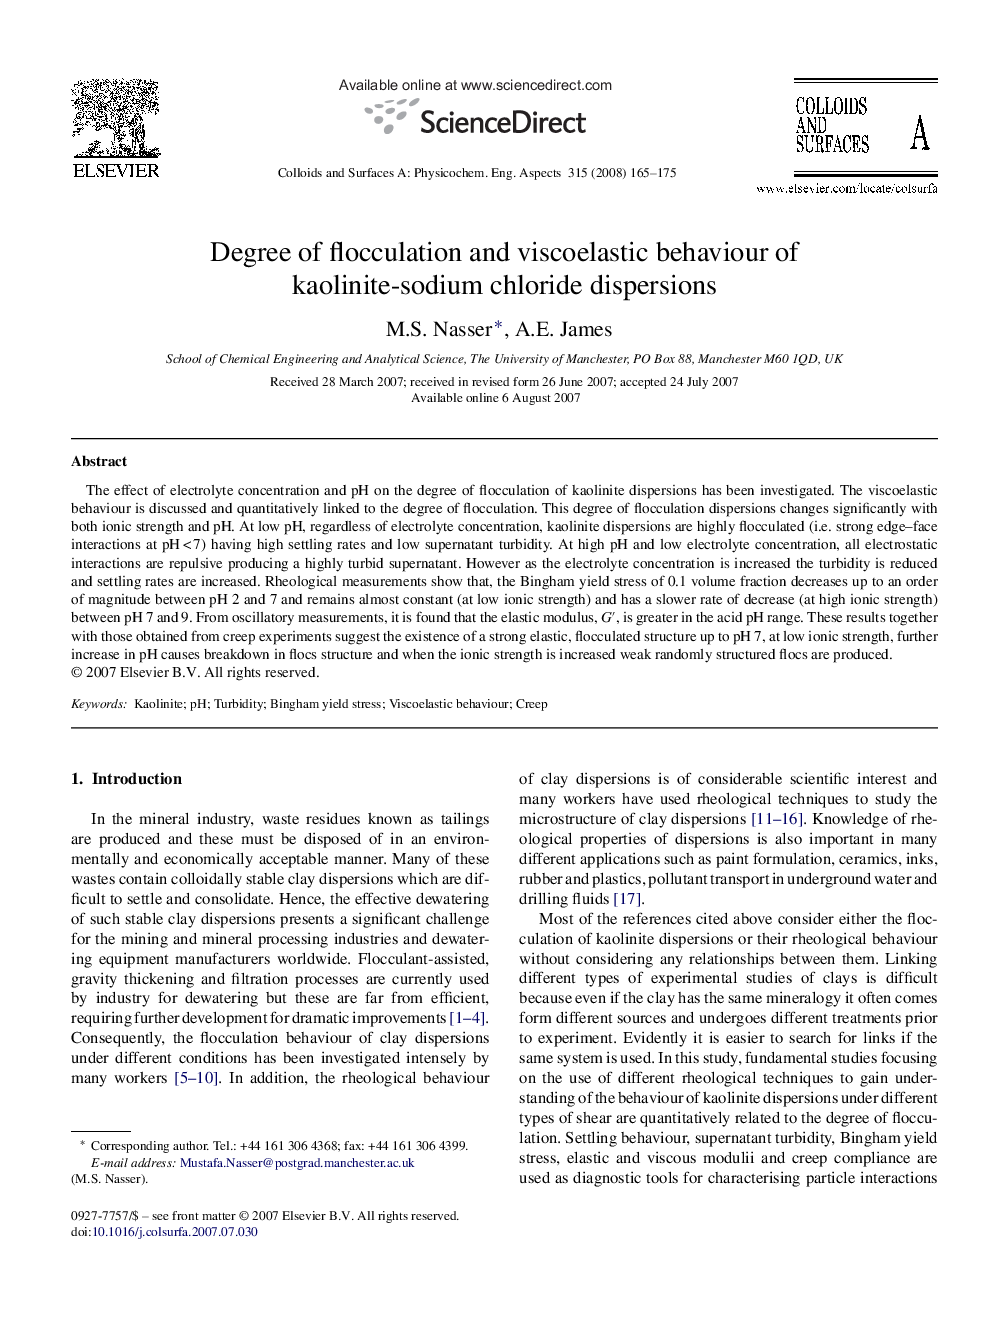 Degree of flocculation and viscoelastic behaviour of kaolinite-sodium chloride dispersions